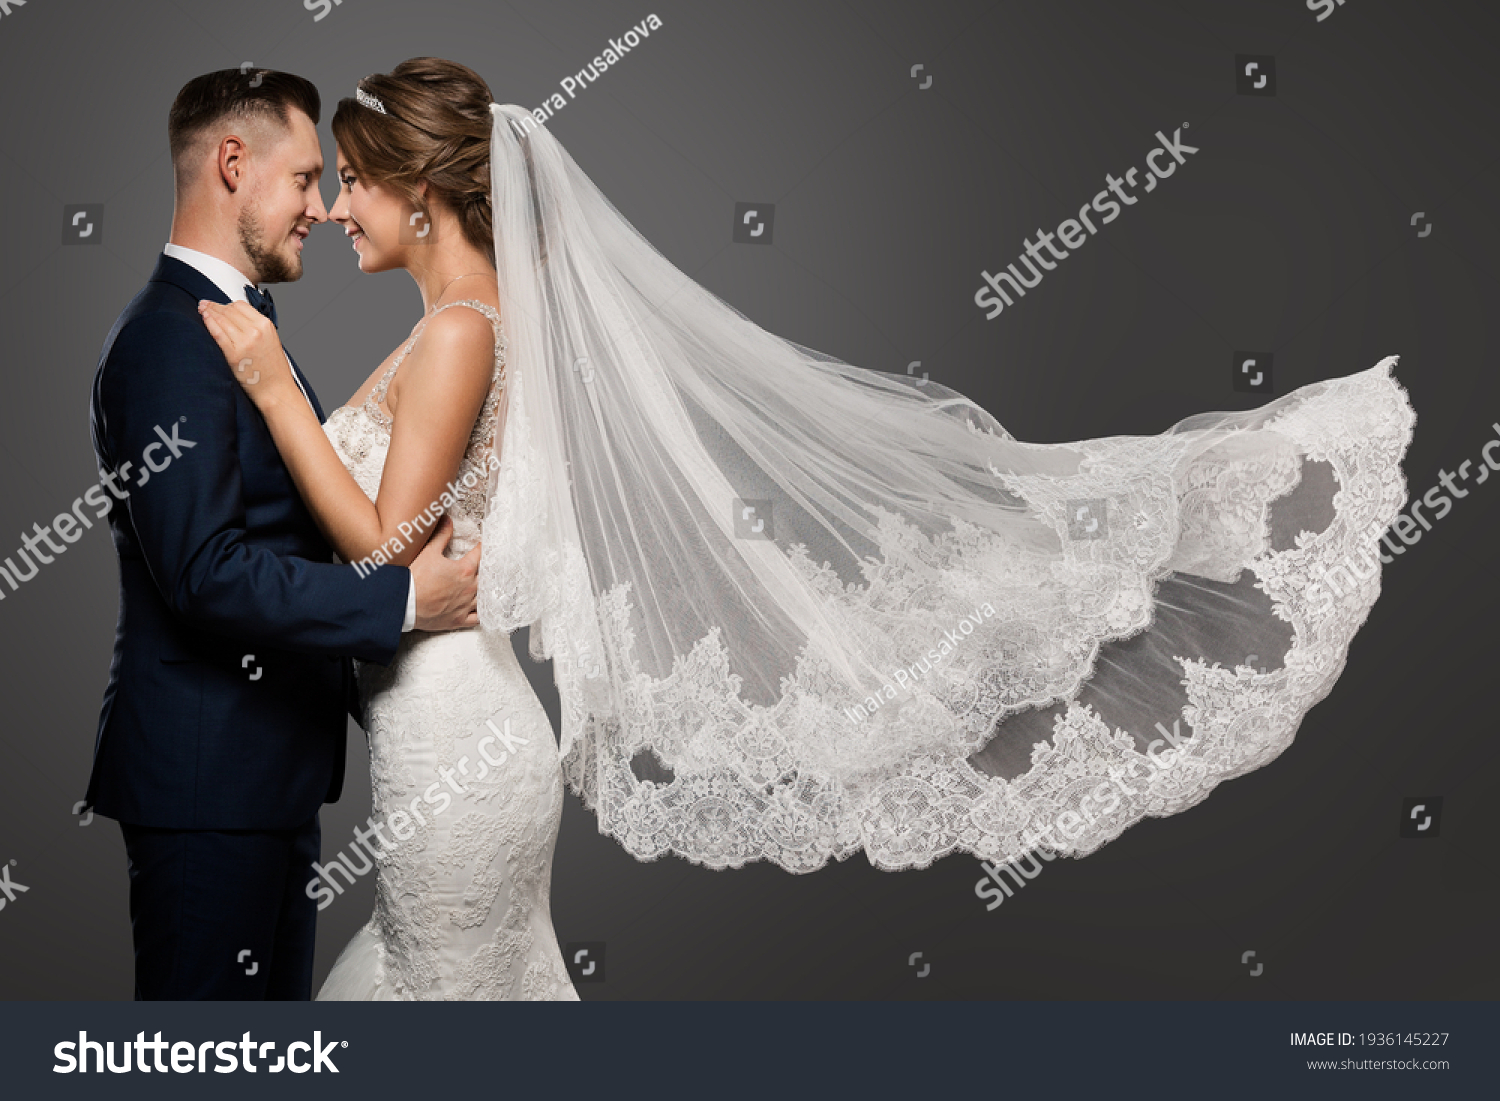 Wedding Couple Dancing. Romantic Bride and Groom Portrait. Bridal long Veil flying over Gray Studio Background #1936145227